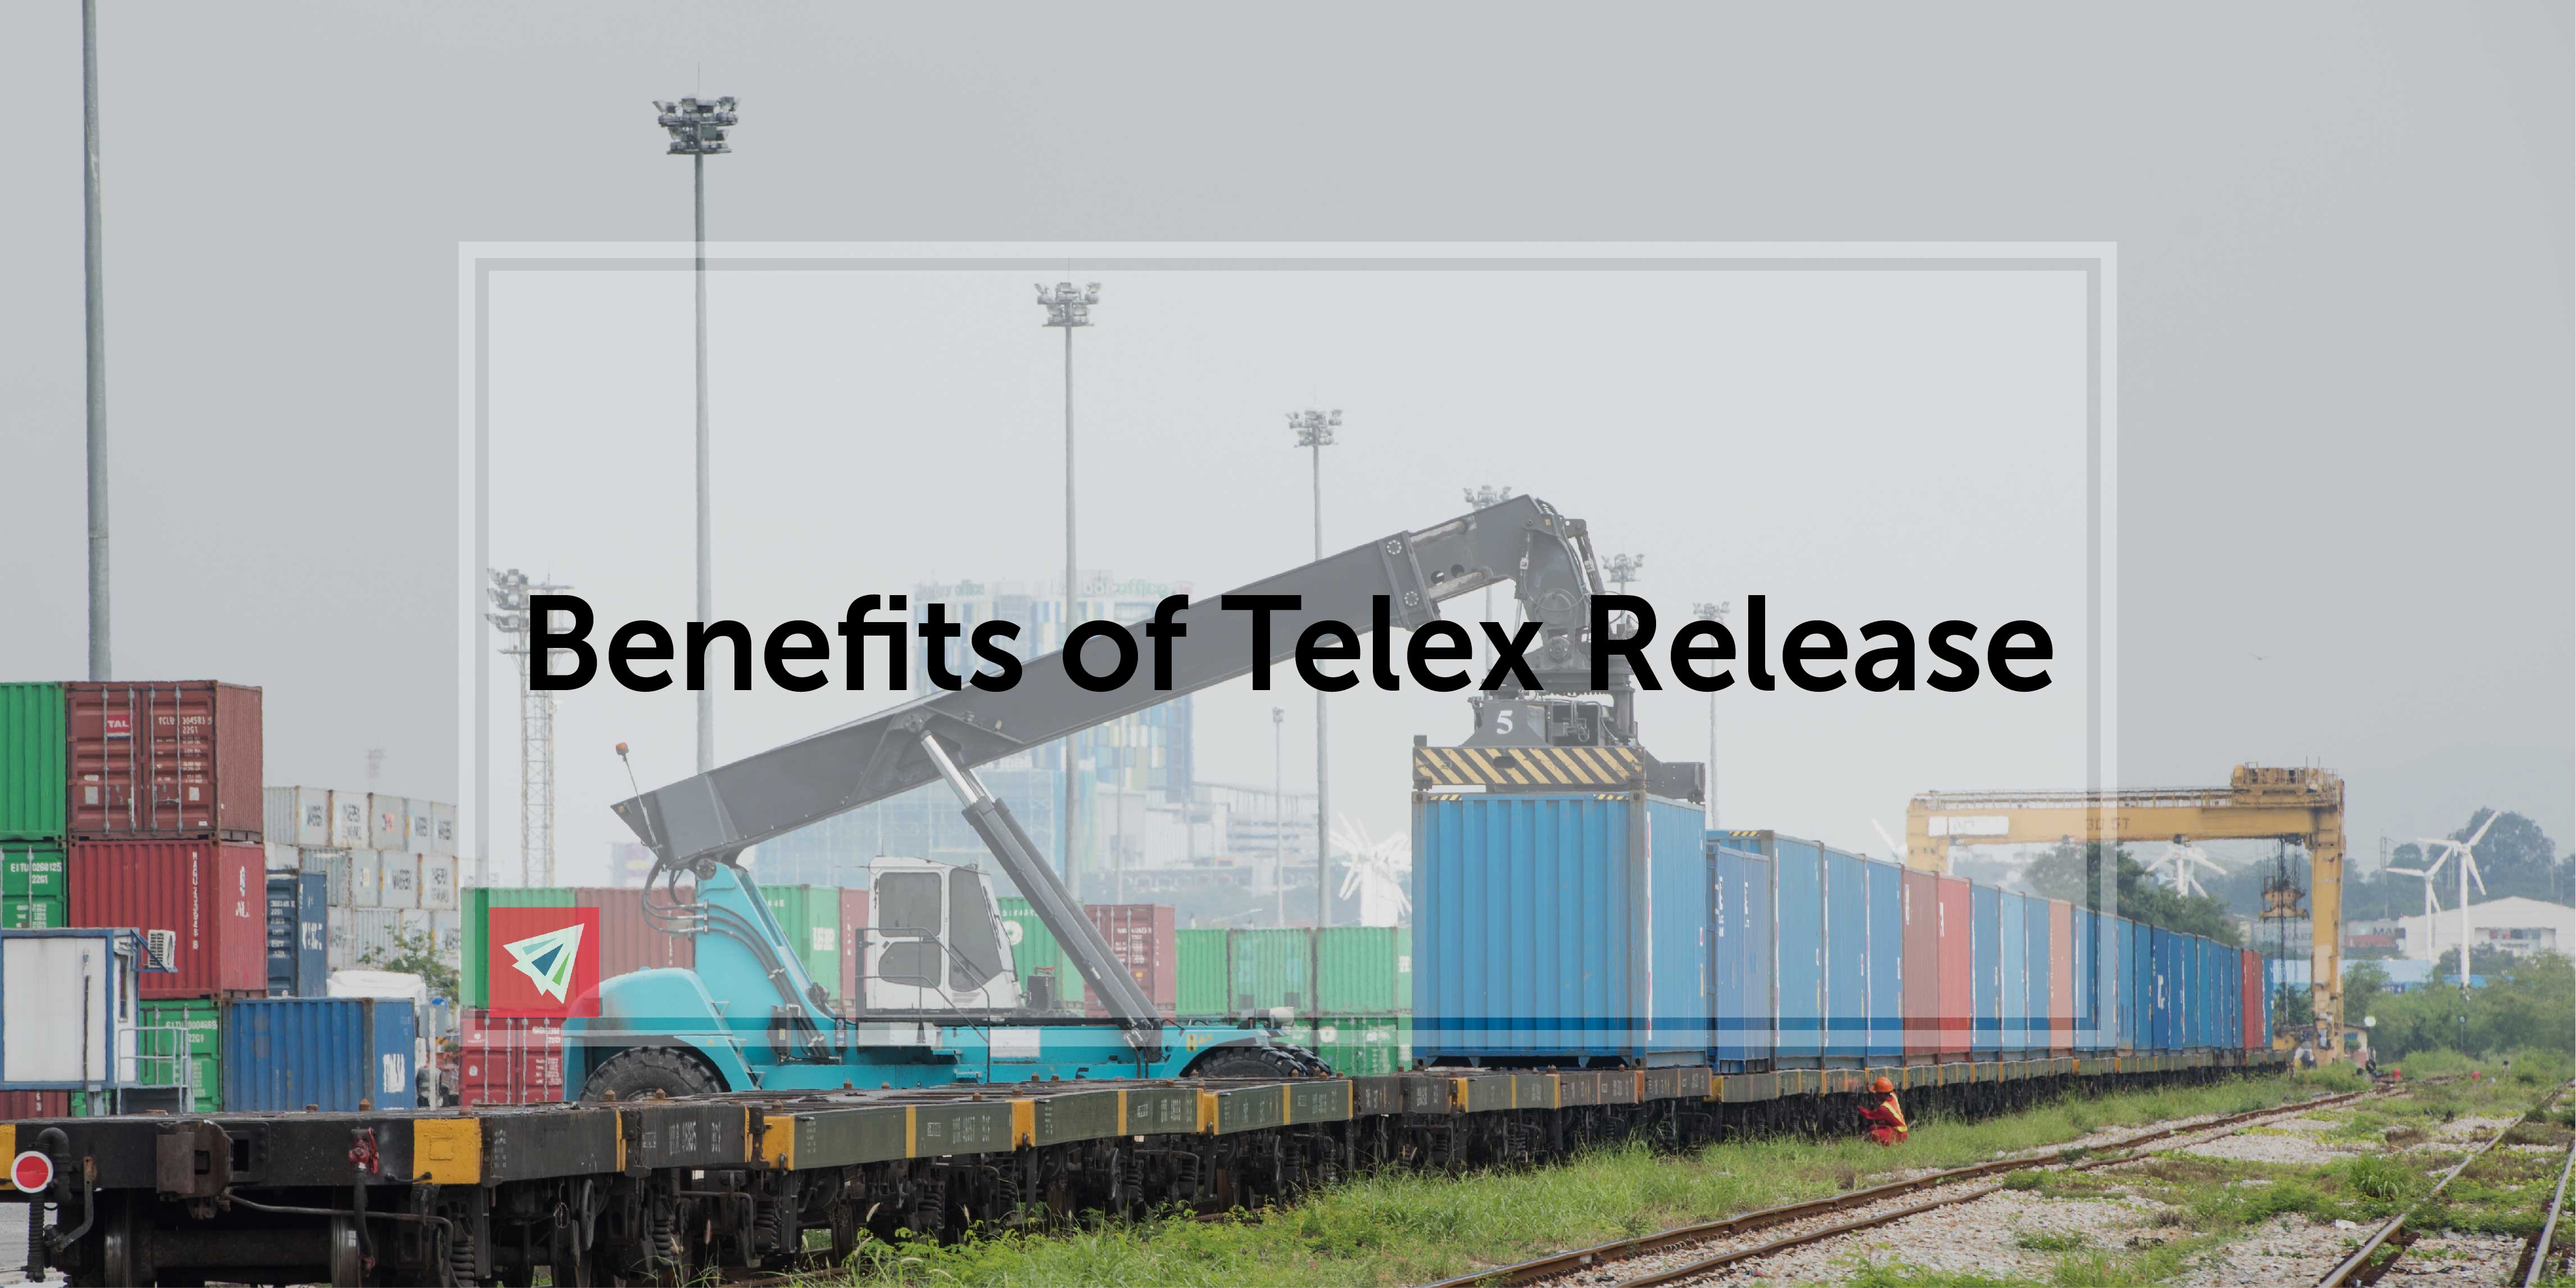 Benefit of Telex Release